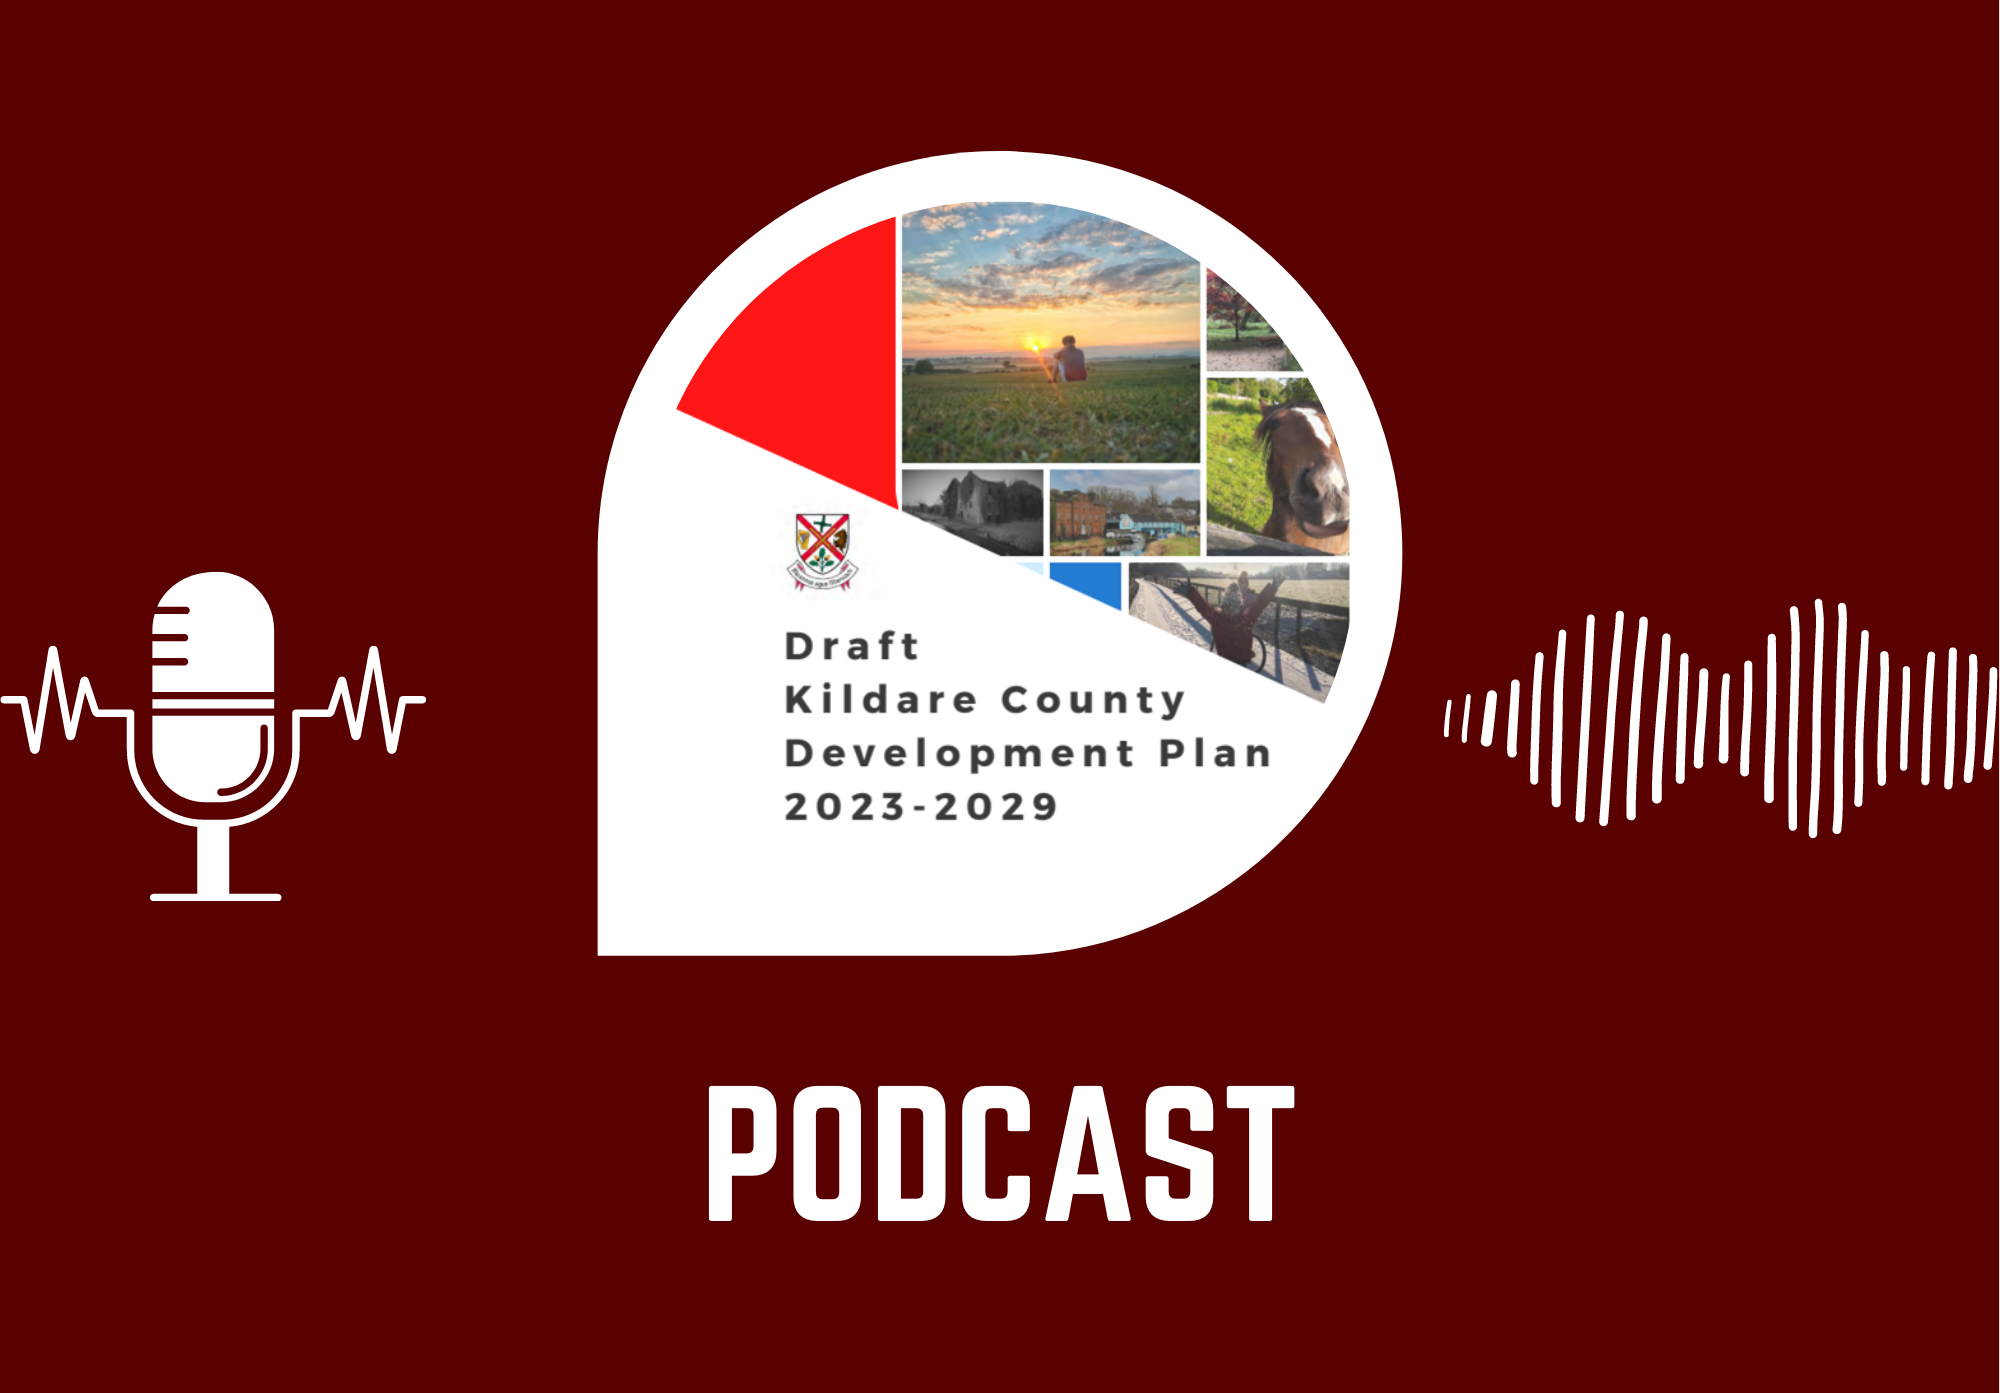 Kildare County Council Launch Podcast on the Kildare County Development Plan